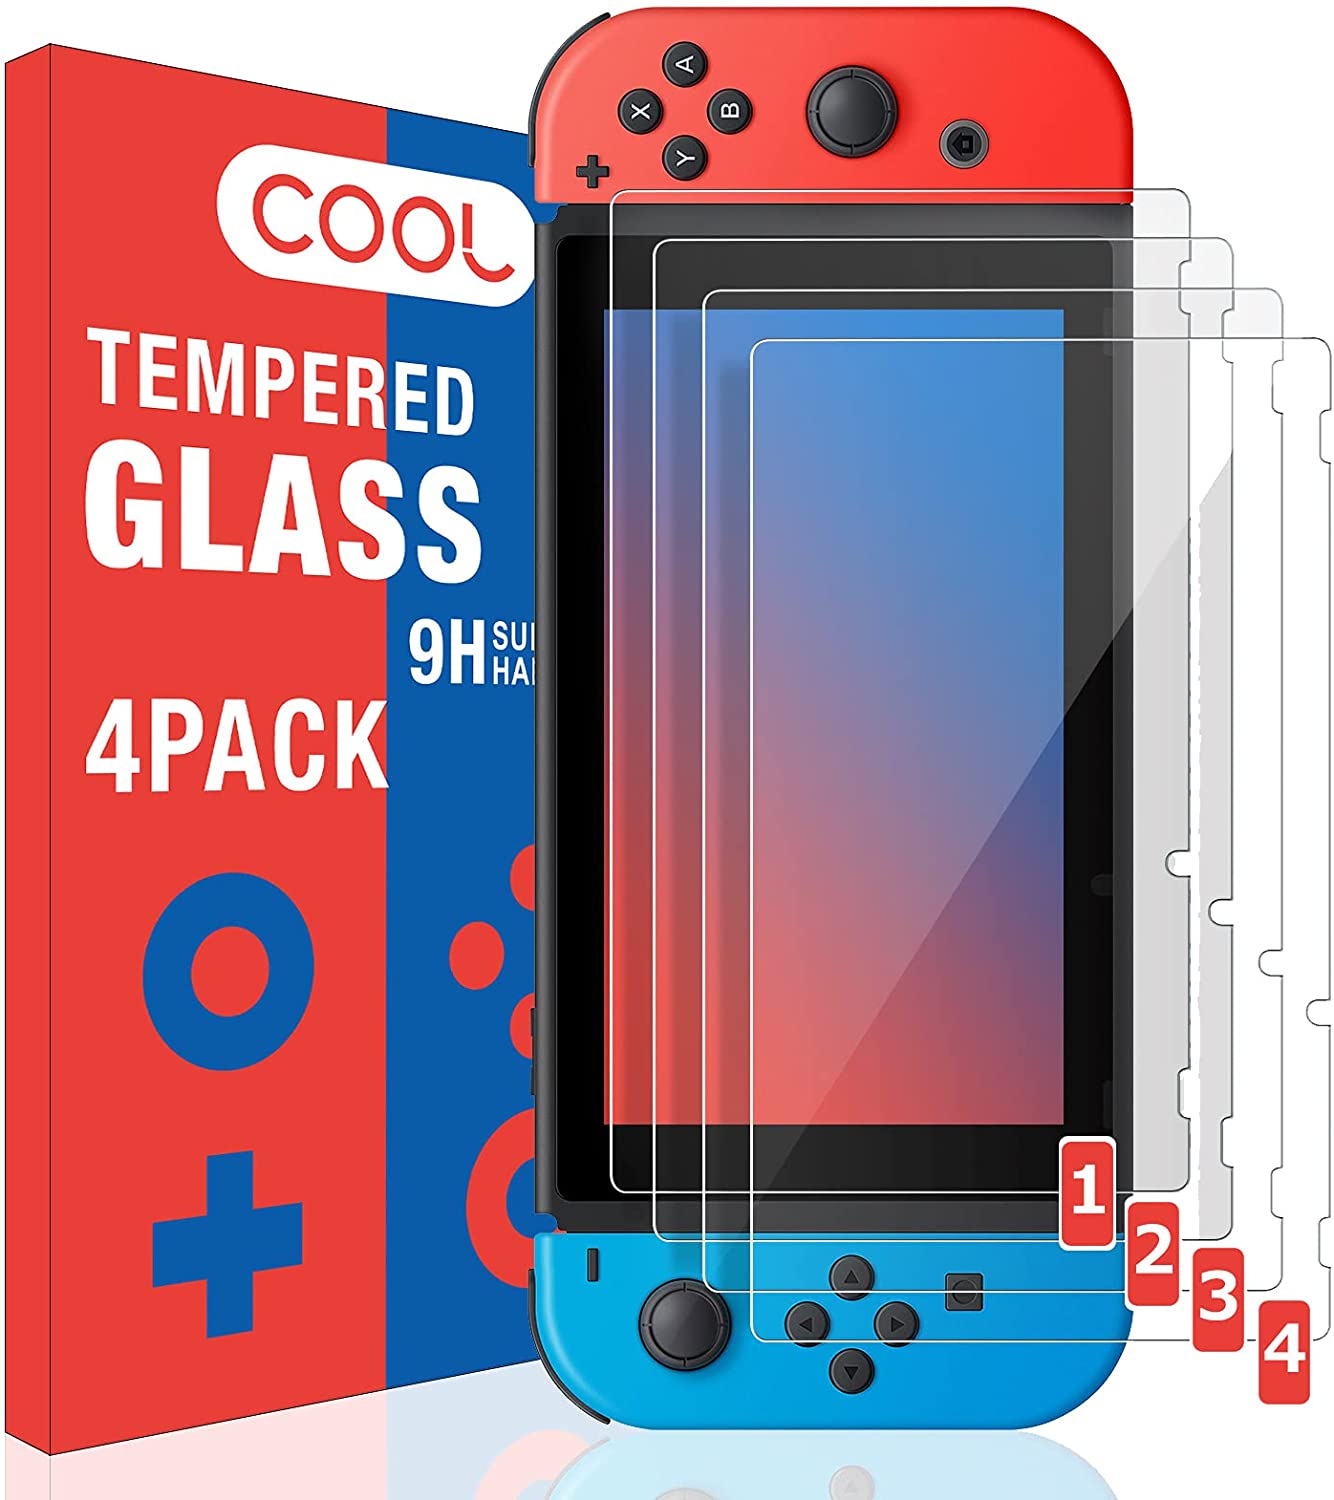 4Pack Beschermende Glas Voor Nintendo Switch Gehard Glas Screen Protector Voor Ns Glas Accessoires Hd Crystal Clear Screen